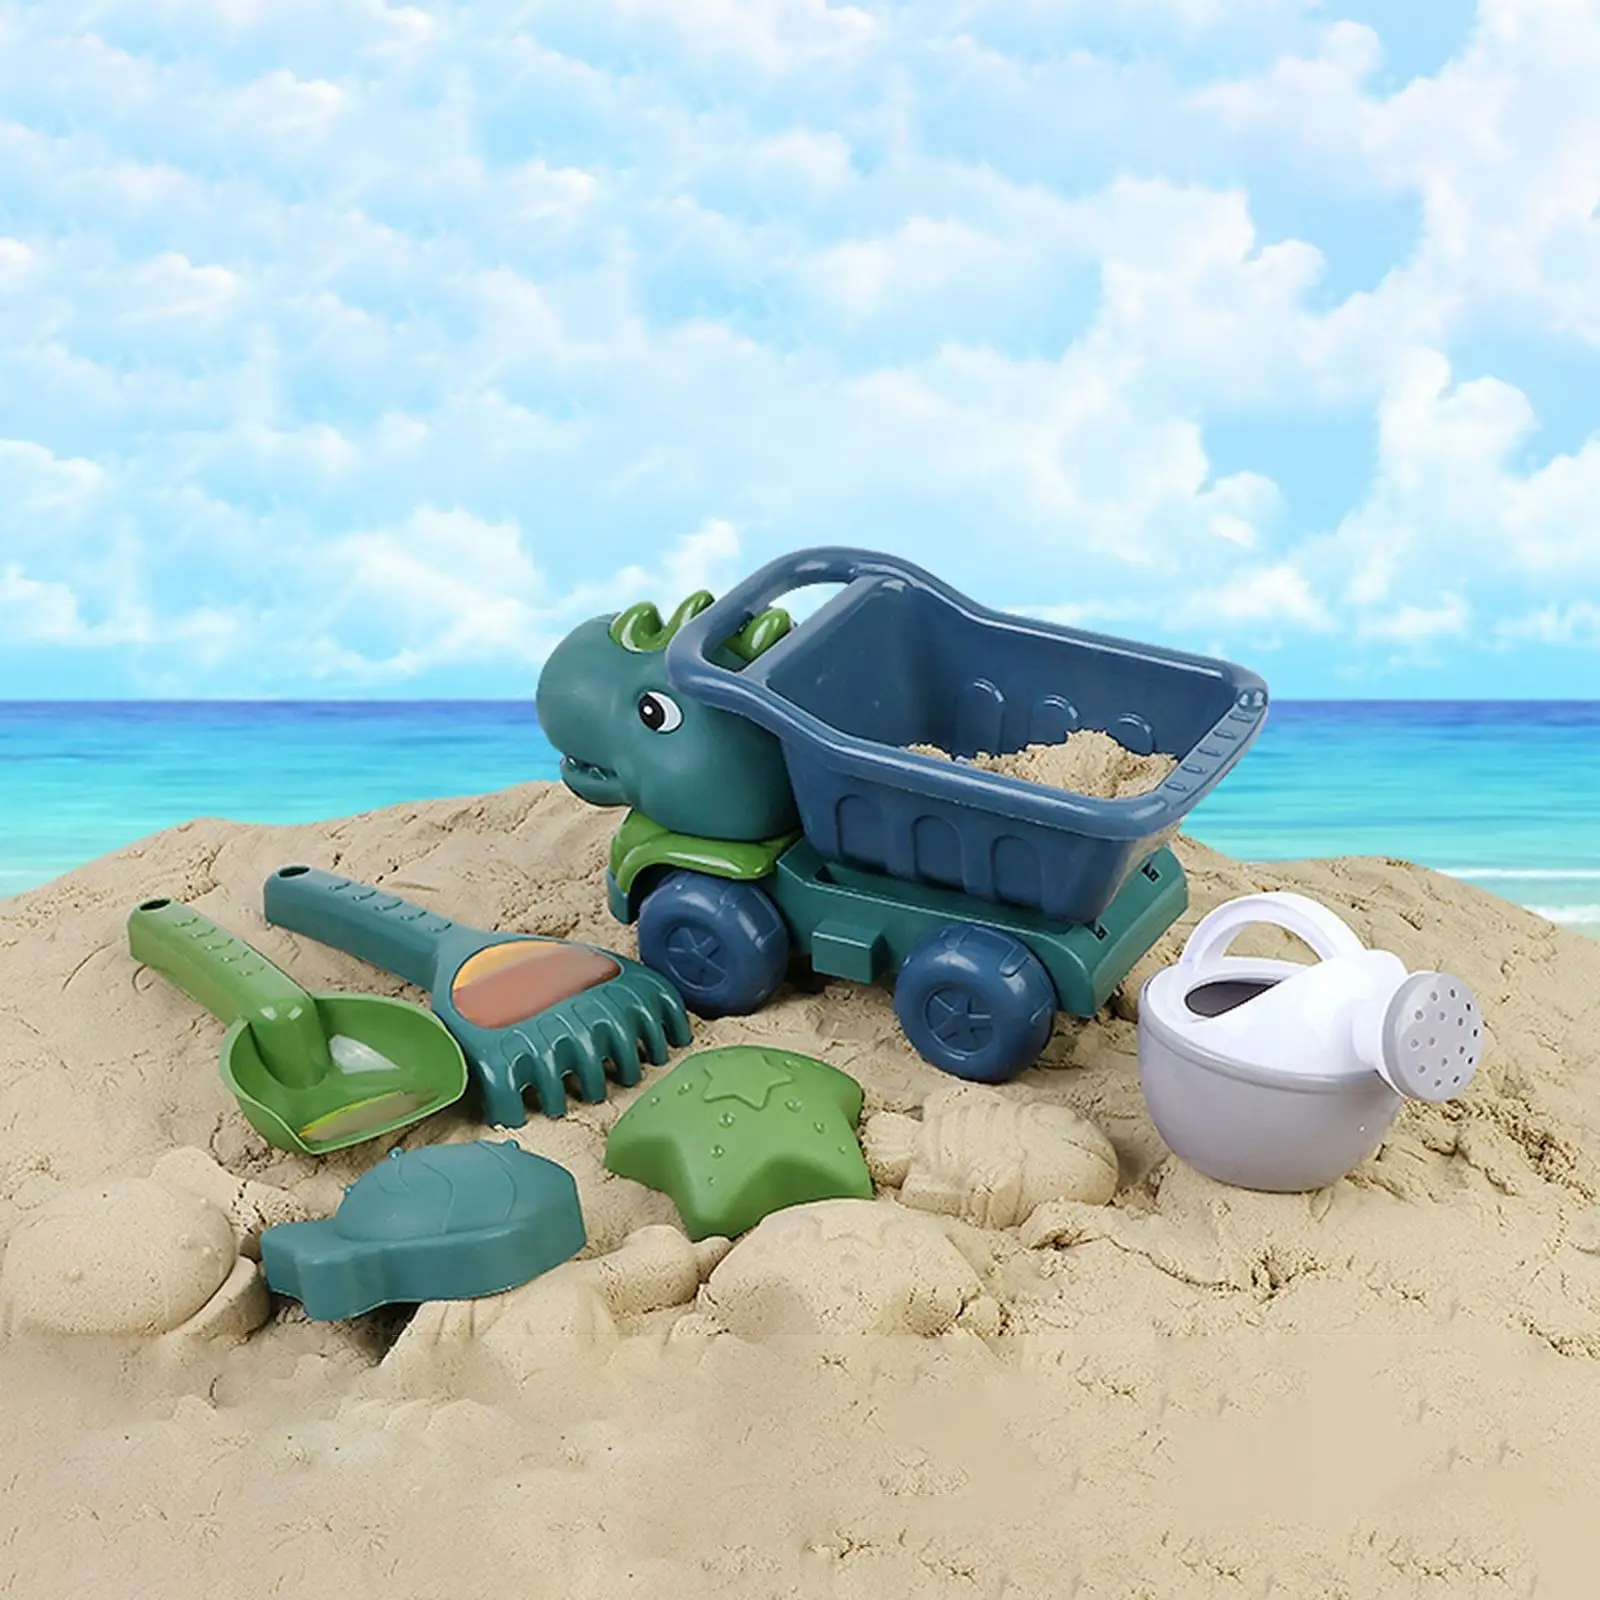 Kids Dinosaur Truck Sand Beach Toy Play Vehicle for Outdoor Activity Kids Children Age 2-6 Baby Toddler